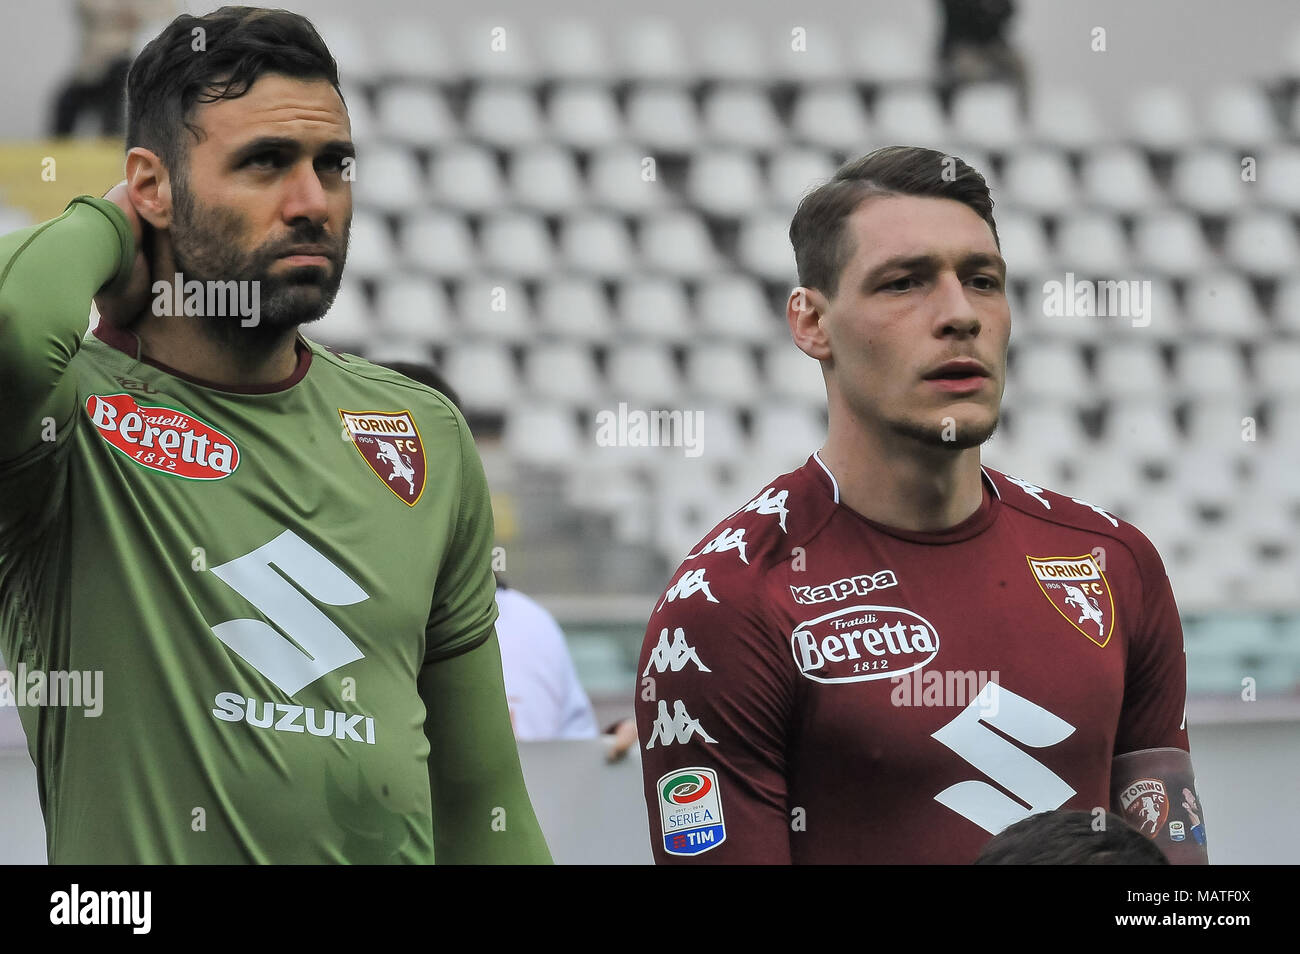 Torino FC vs FC Crotone editorial photo. Image of football - 201480201